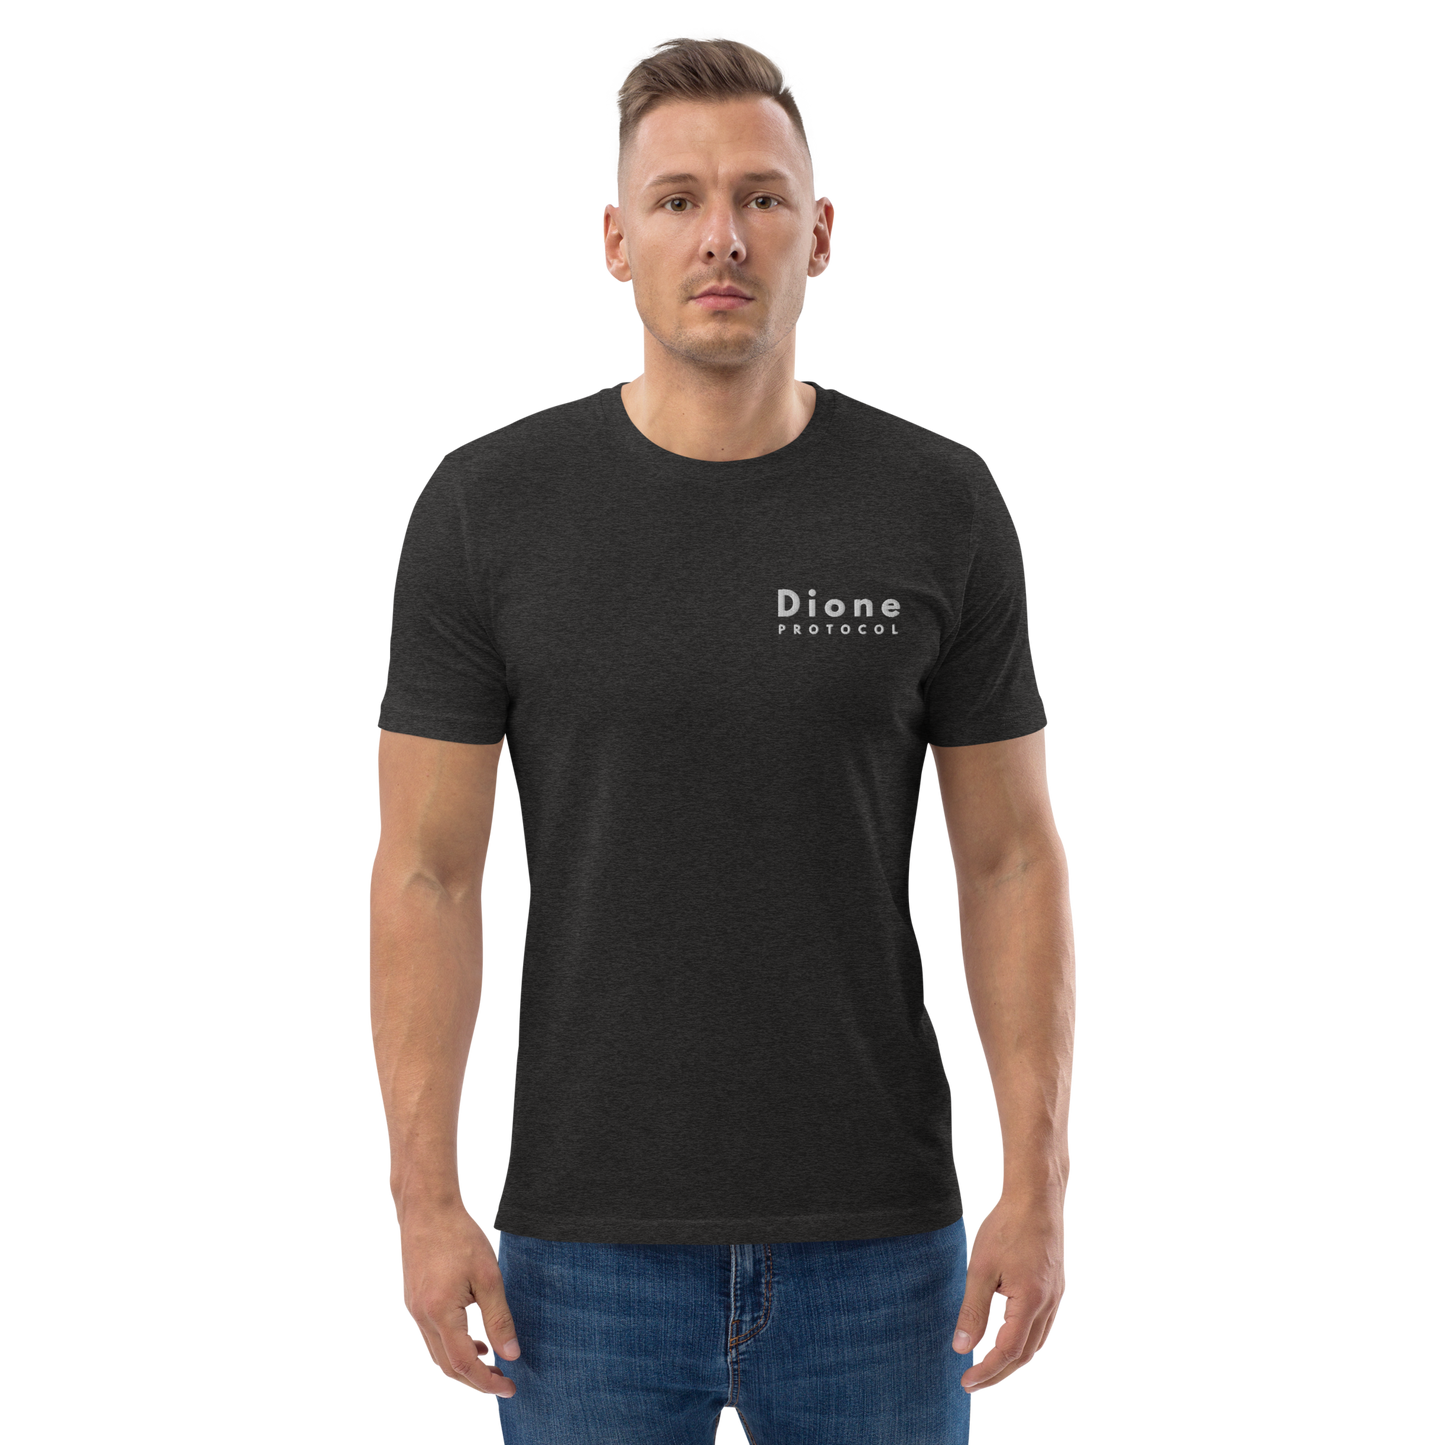 T-Shirt - Space V1.1 - Black, Navy, Grey - Premium